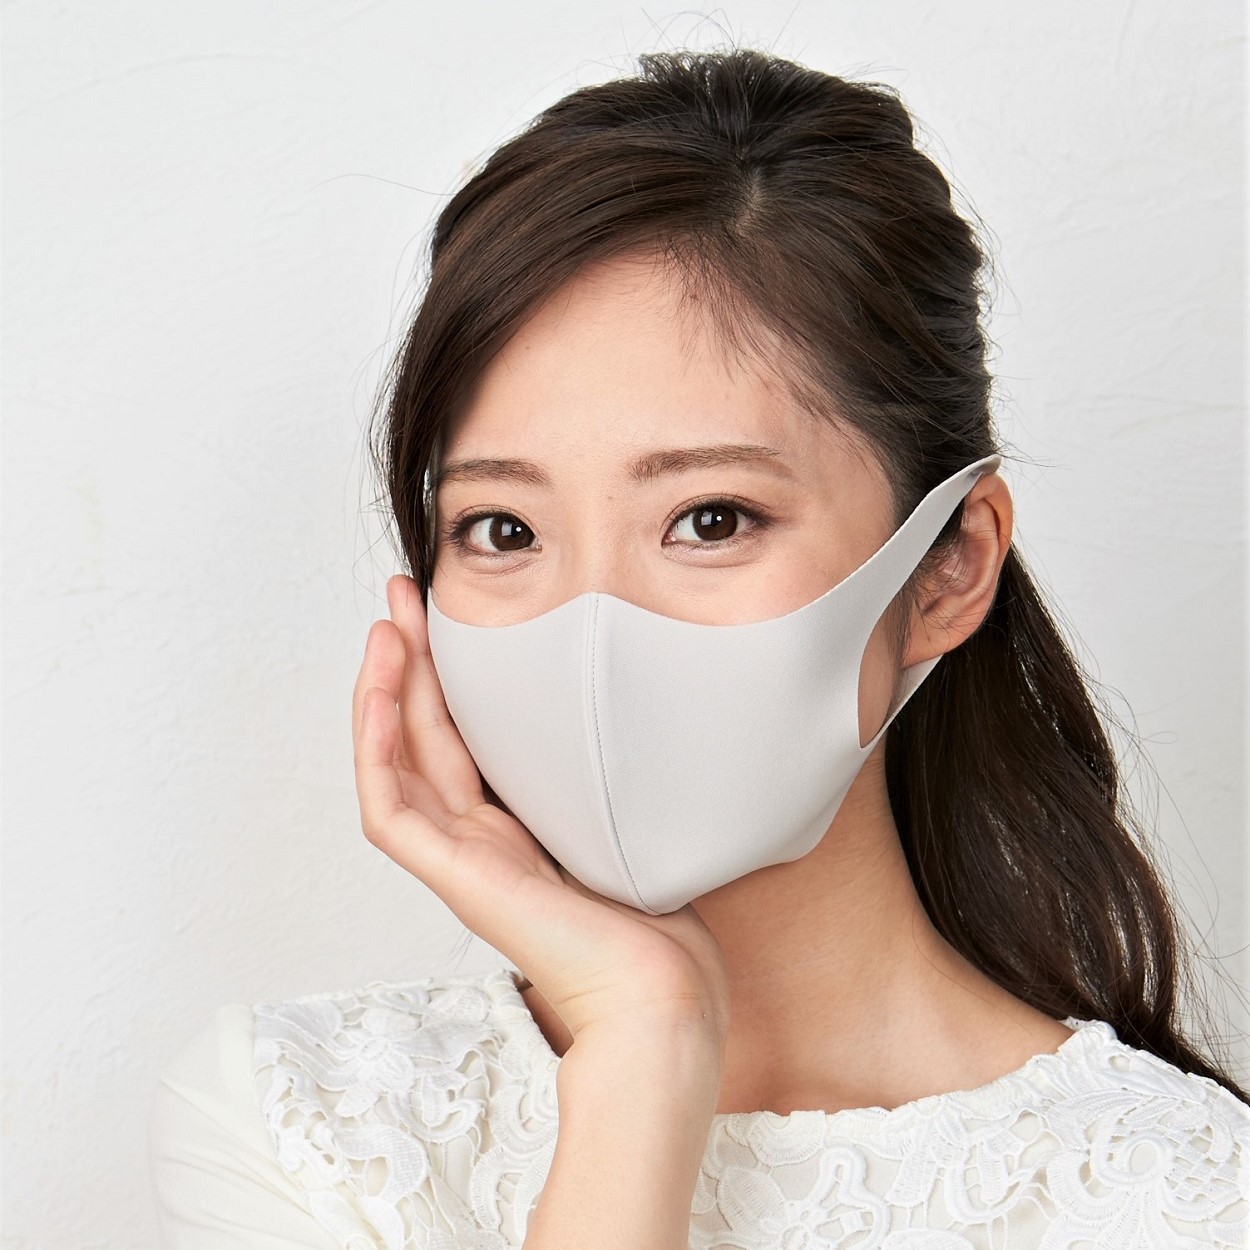 It's New！　新商品販売のお知らせです♥さらに進化した「ぷる♥」マスクをお届けします。